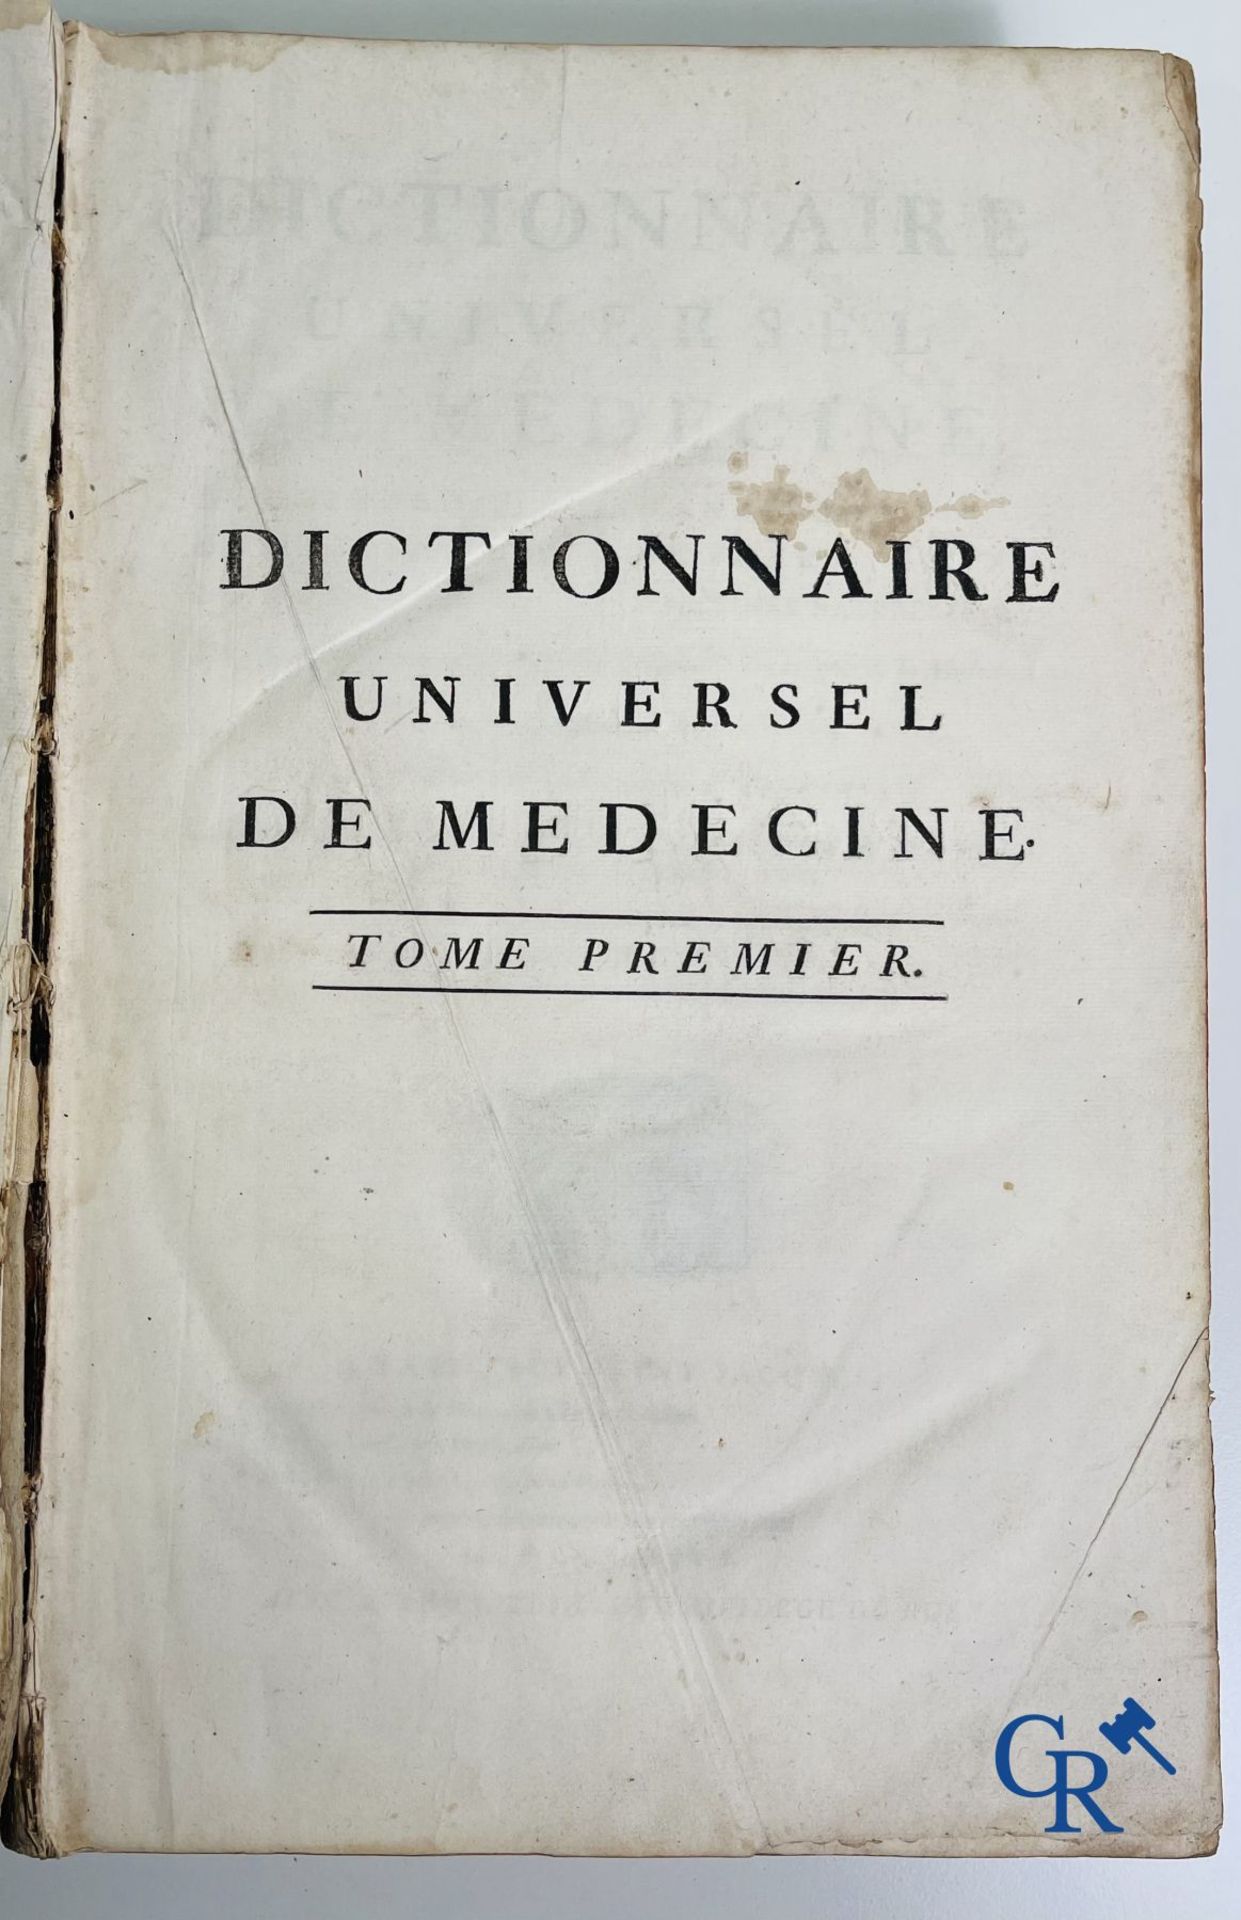 Early printed books: Dictionnaire Universel de Medecine, Robert James. 6 volumes, Paris 1746-1748. - Image 5 of 35